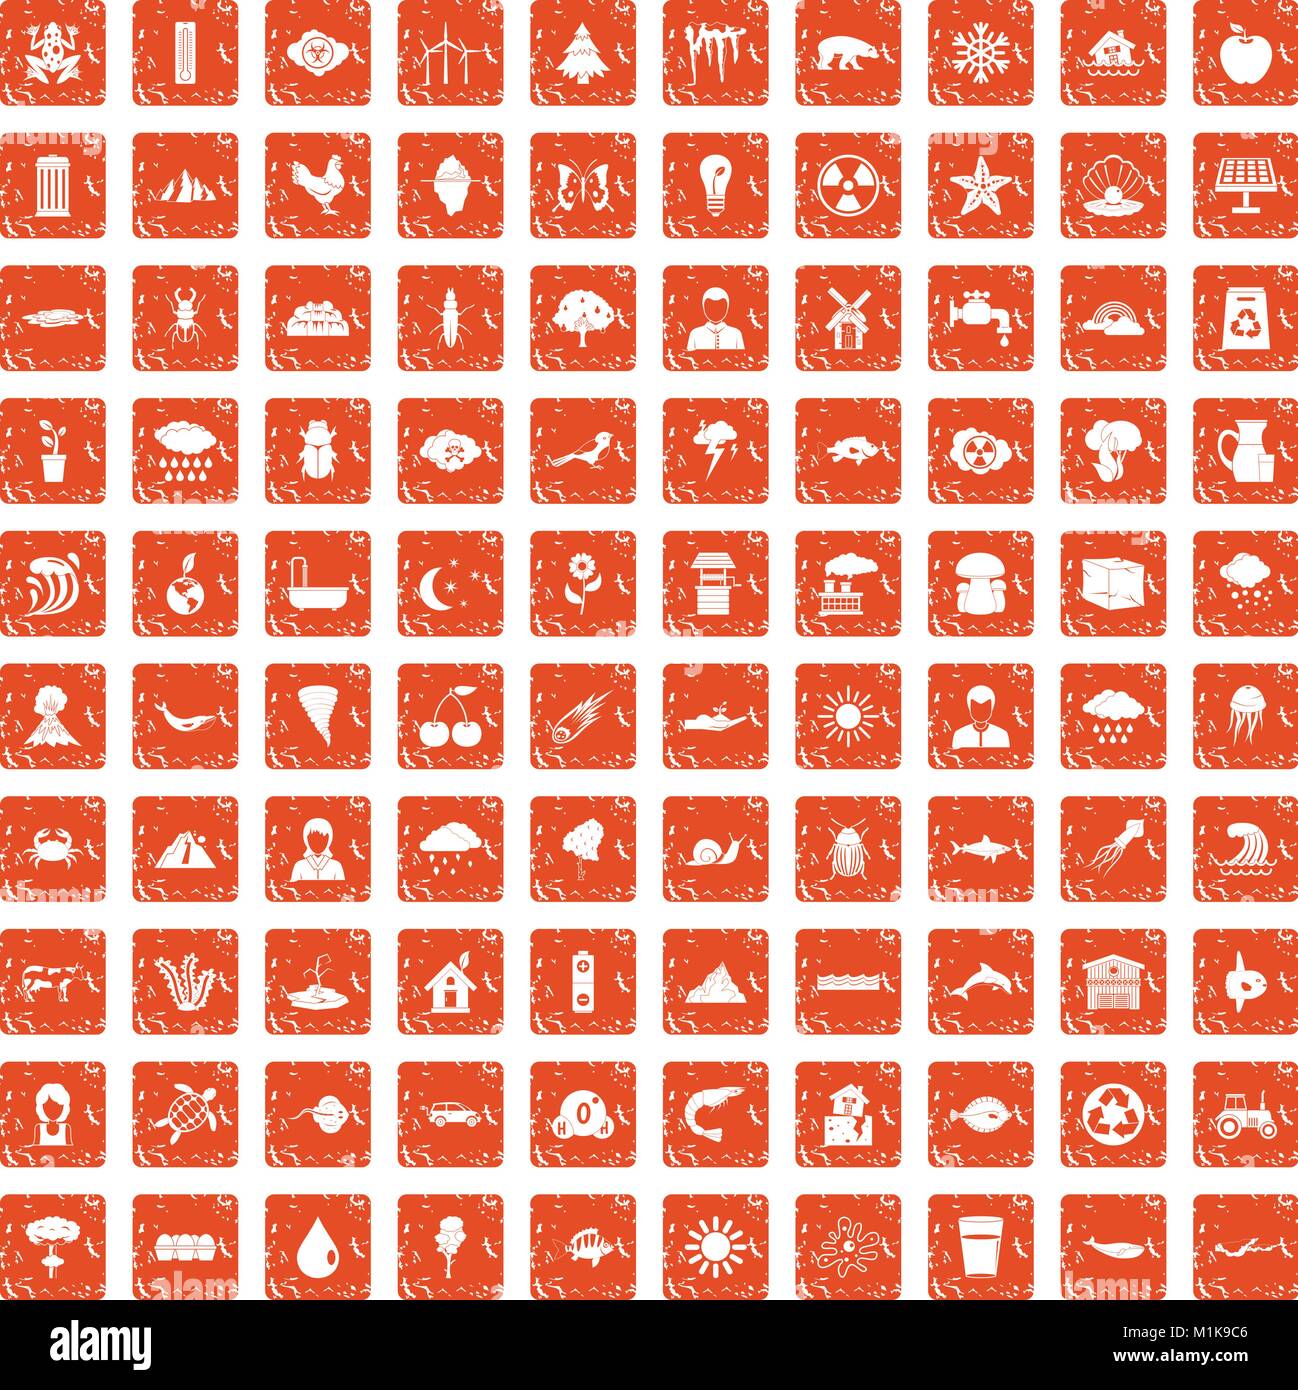 100 earth icons set grunge orange Stock Vector